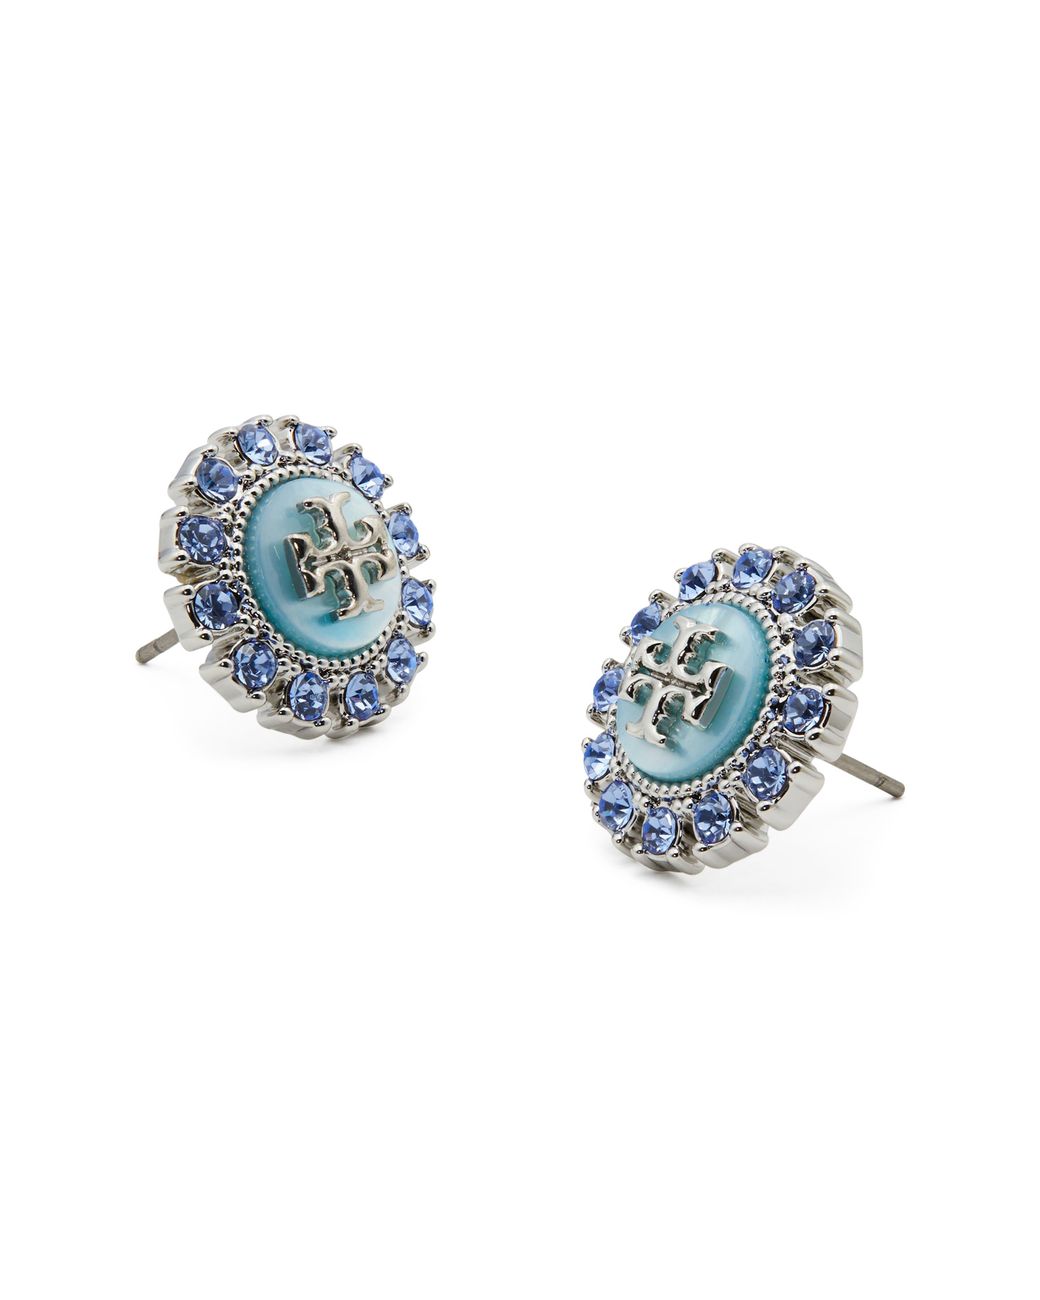 Tory Burch Kira Crystal Stud Earrings in Blue